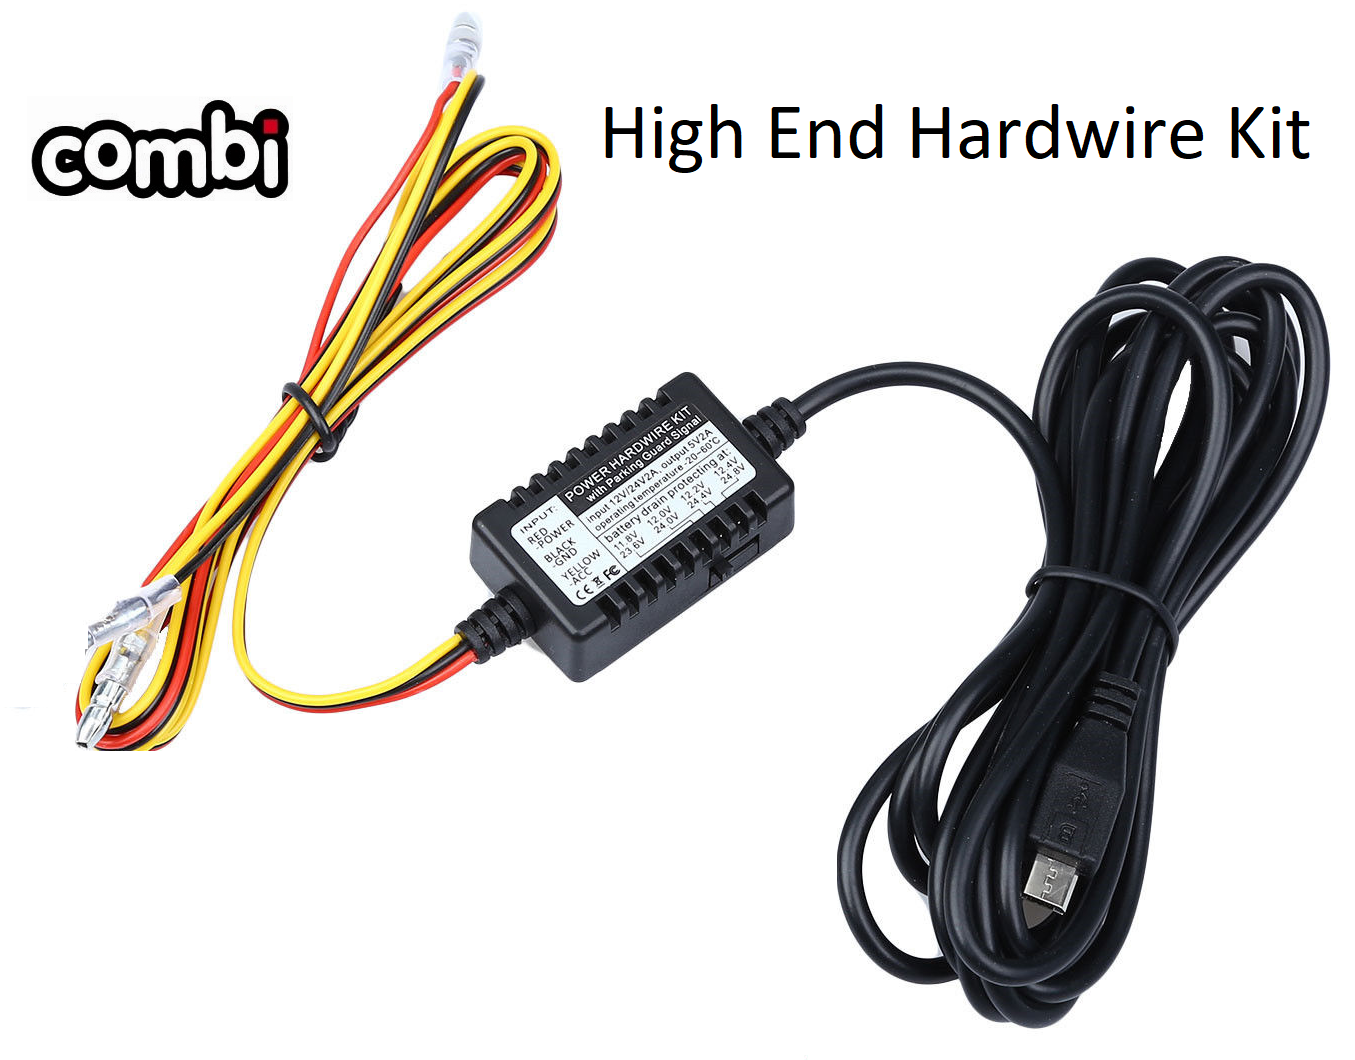 High End Digital Hard Wire Kit